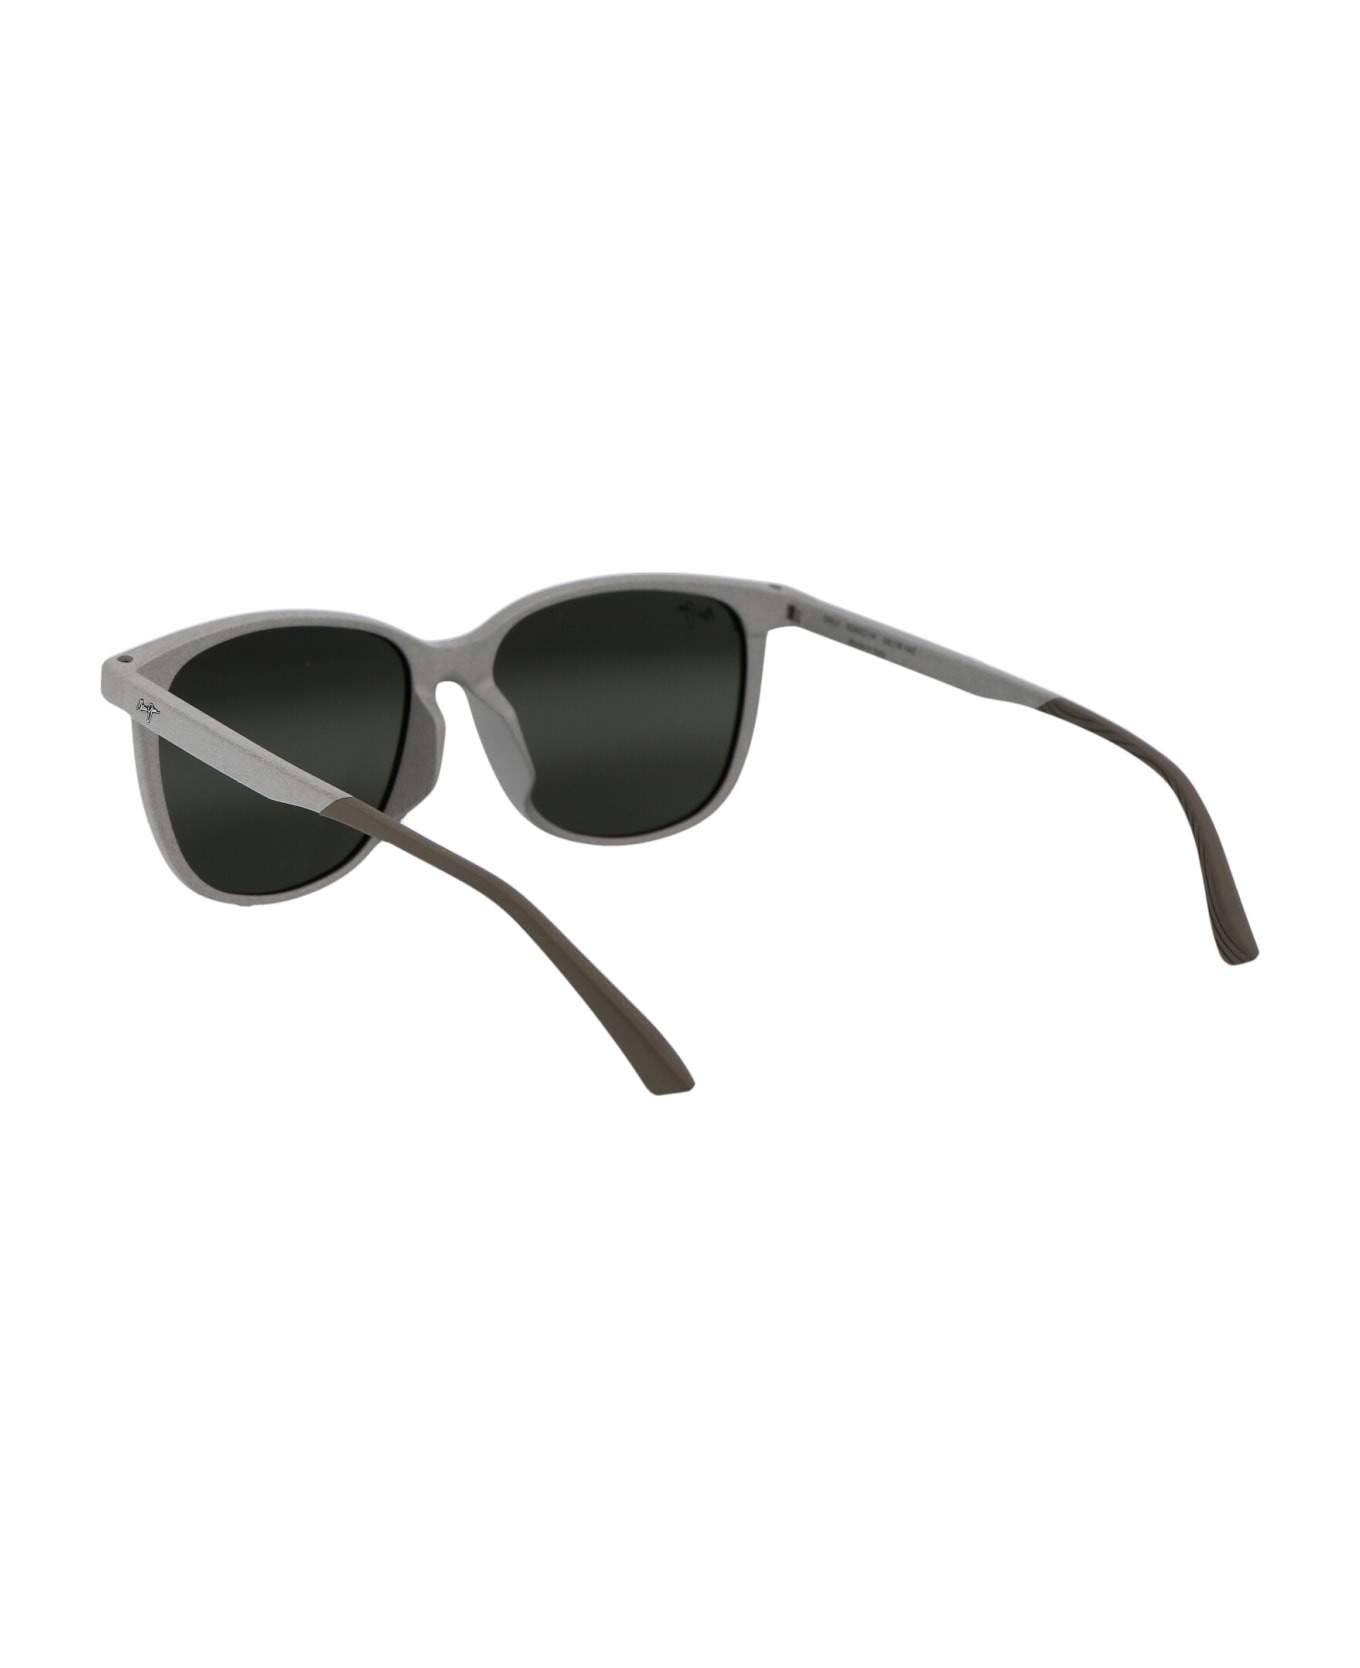 Maui Jim Opio Sunglasses - 03 GREY OPIO SHINY BLUE サングラス